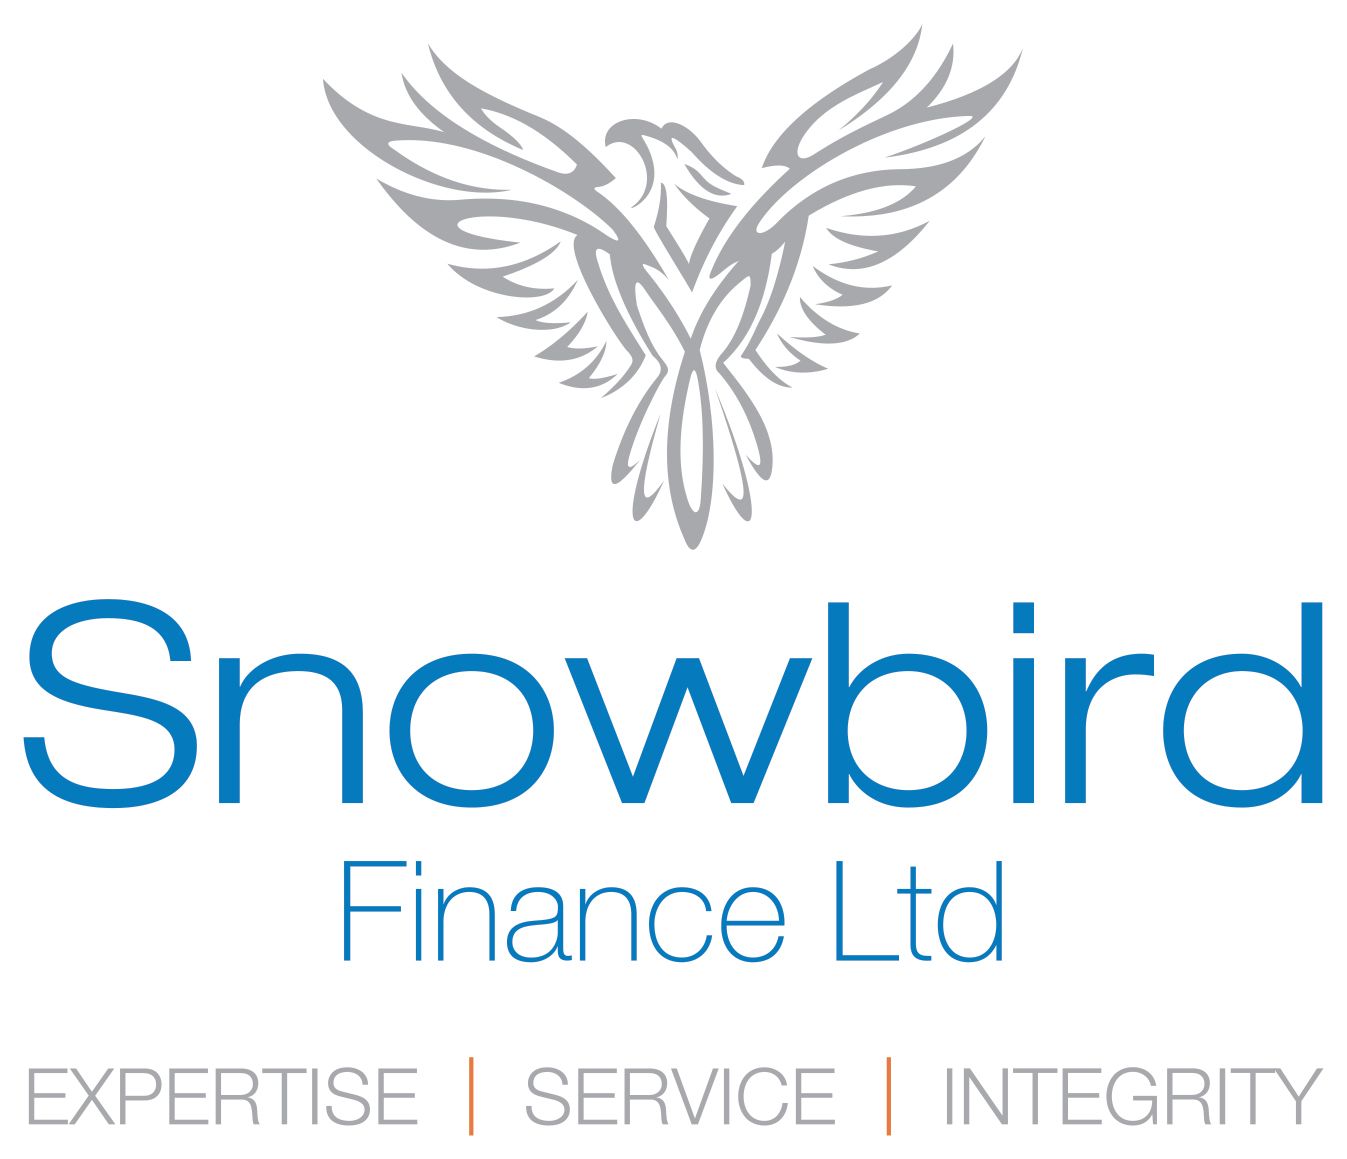 Snowbird Finance Ltd